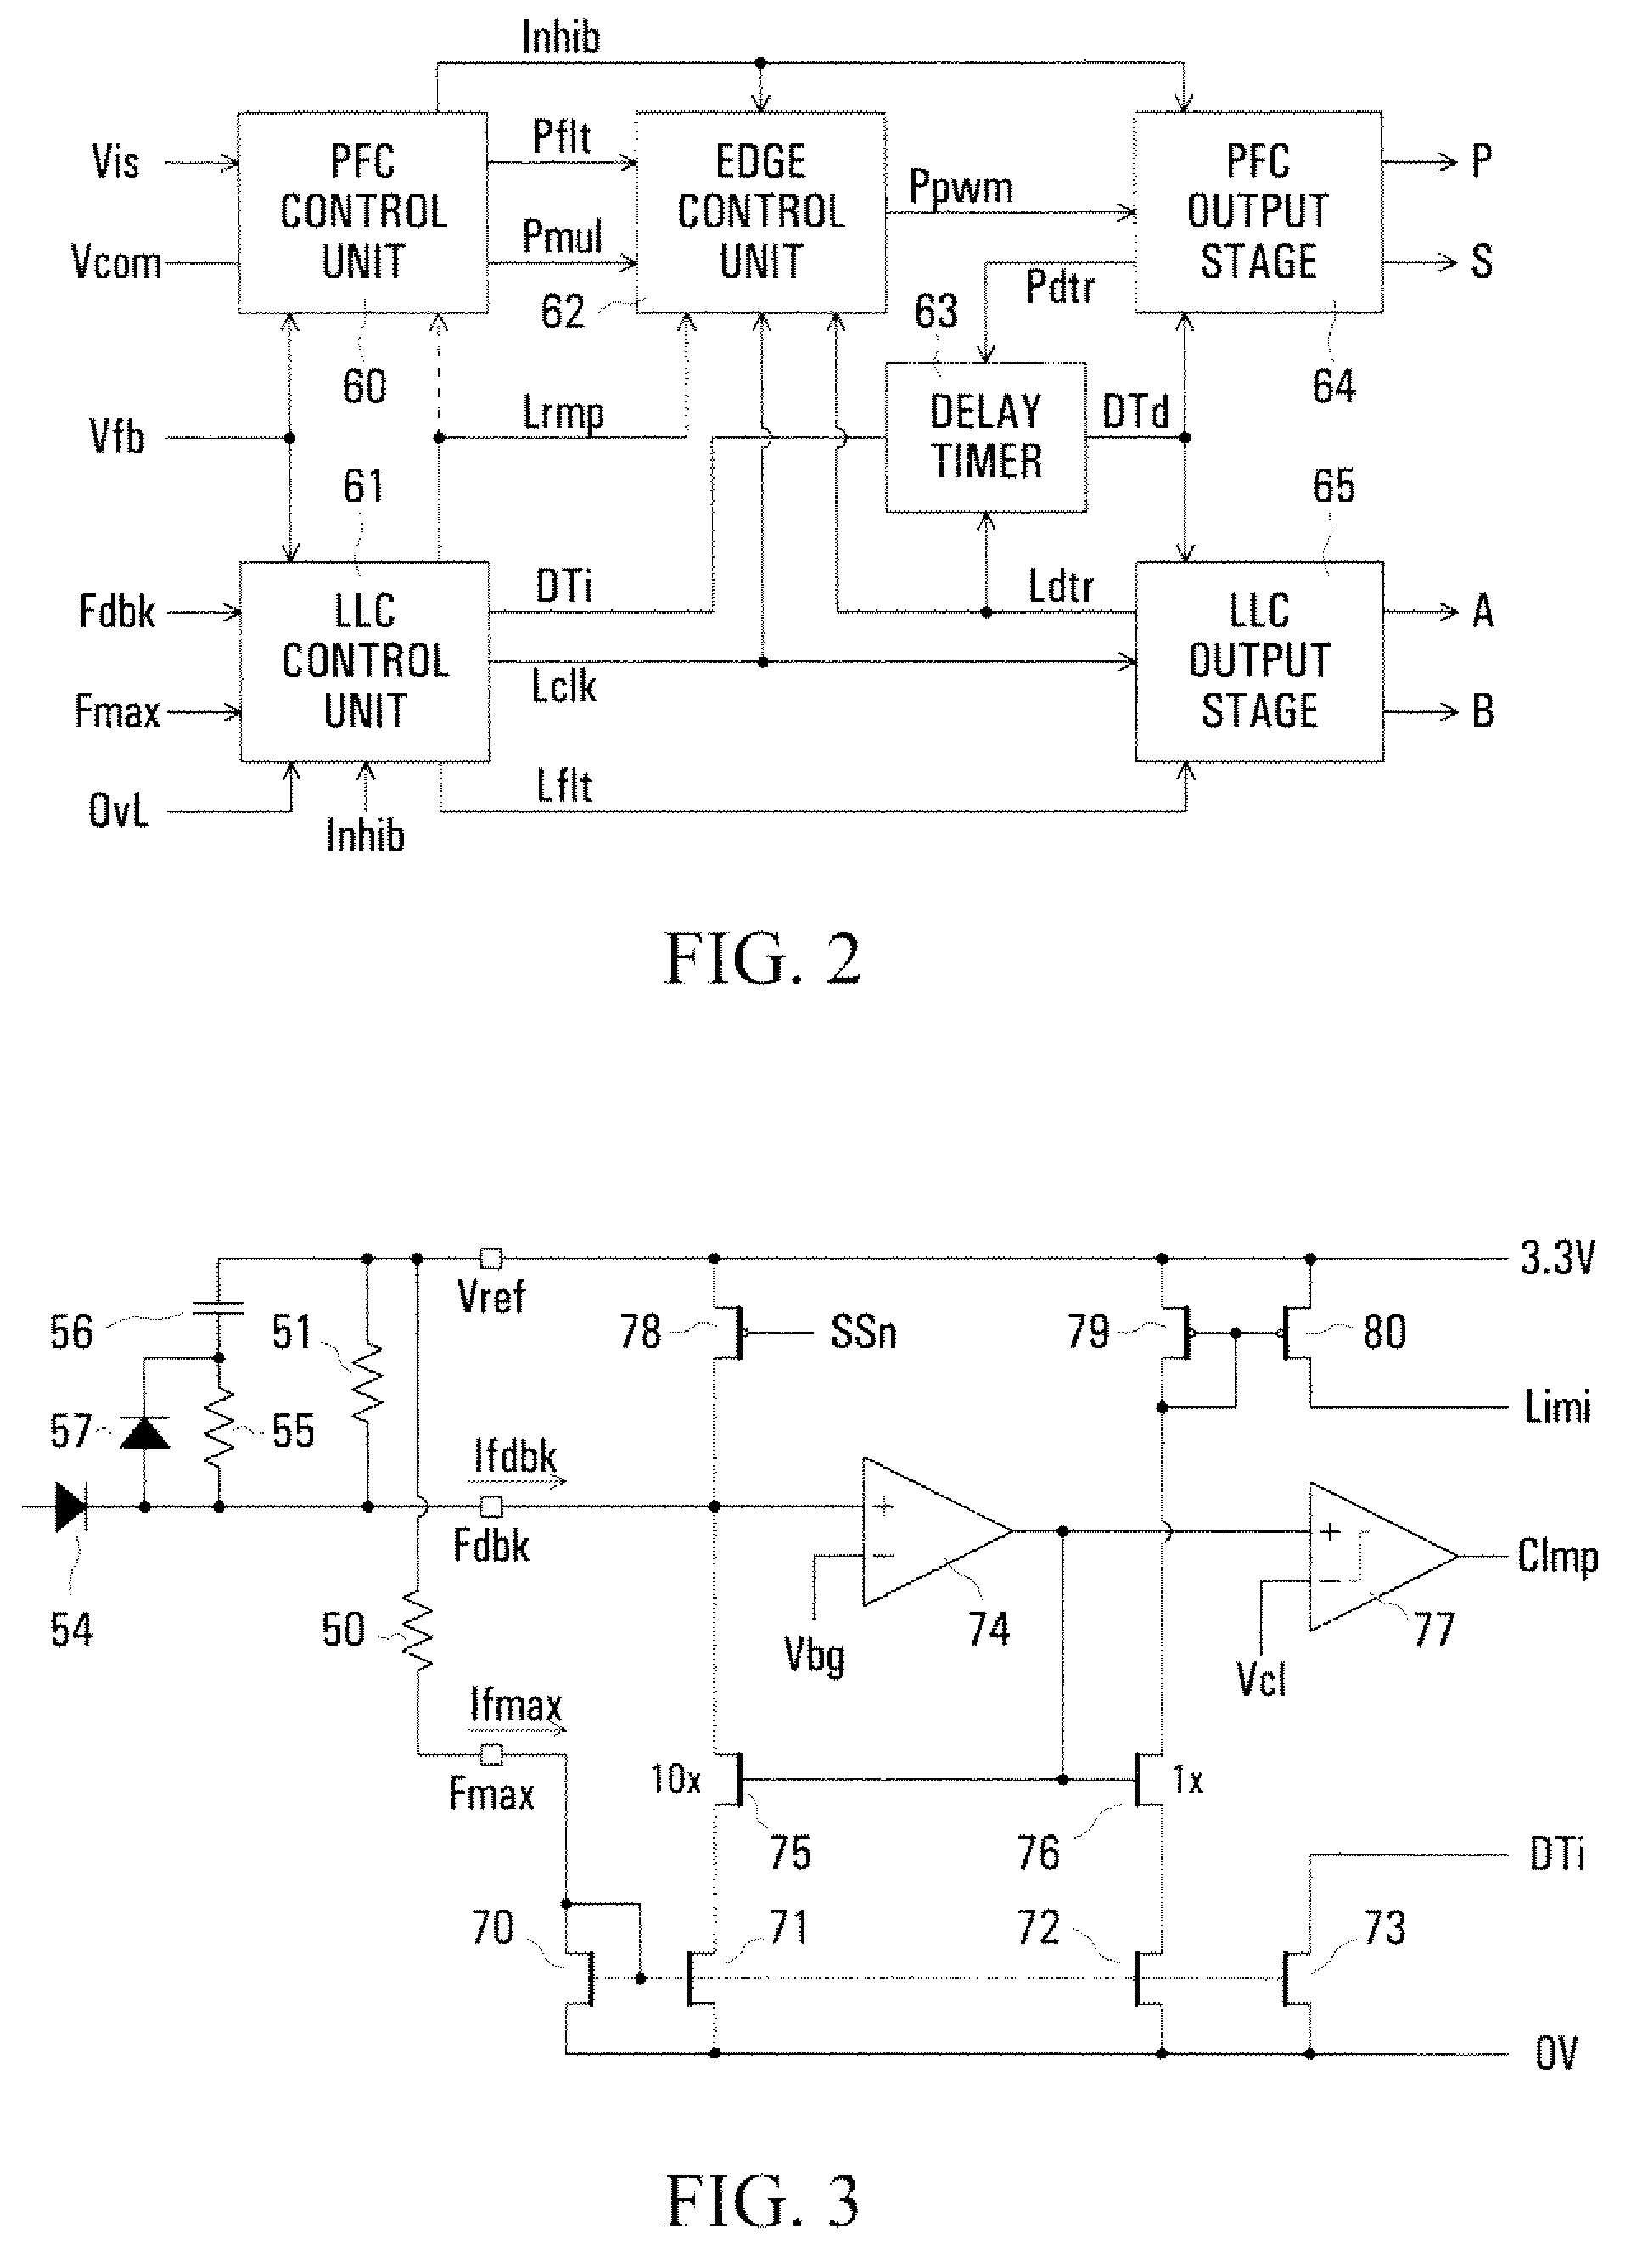 Control arrangement for a resonant mode power converter